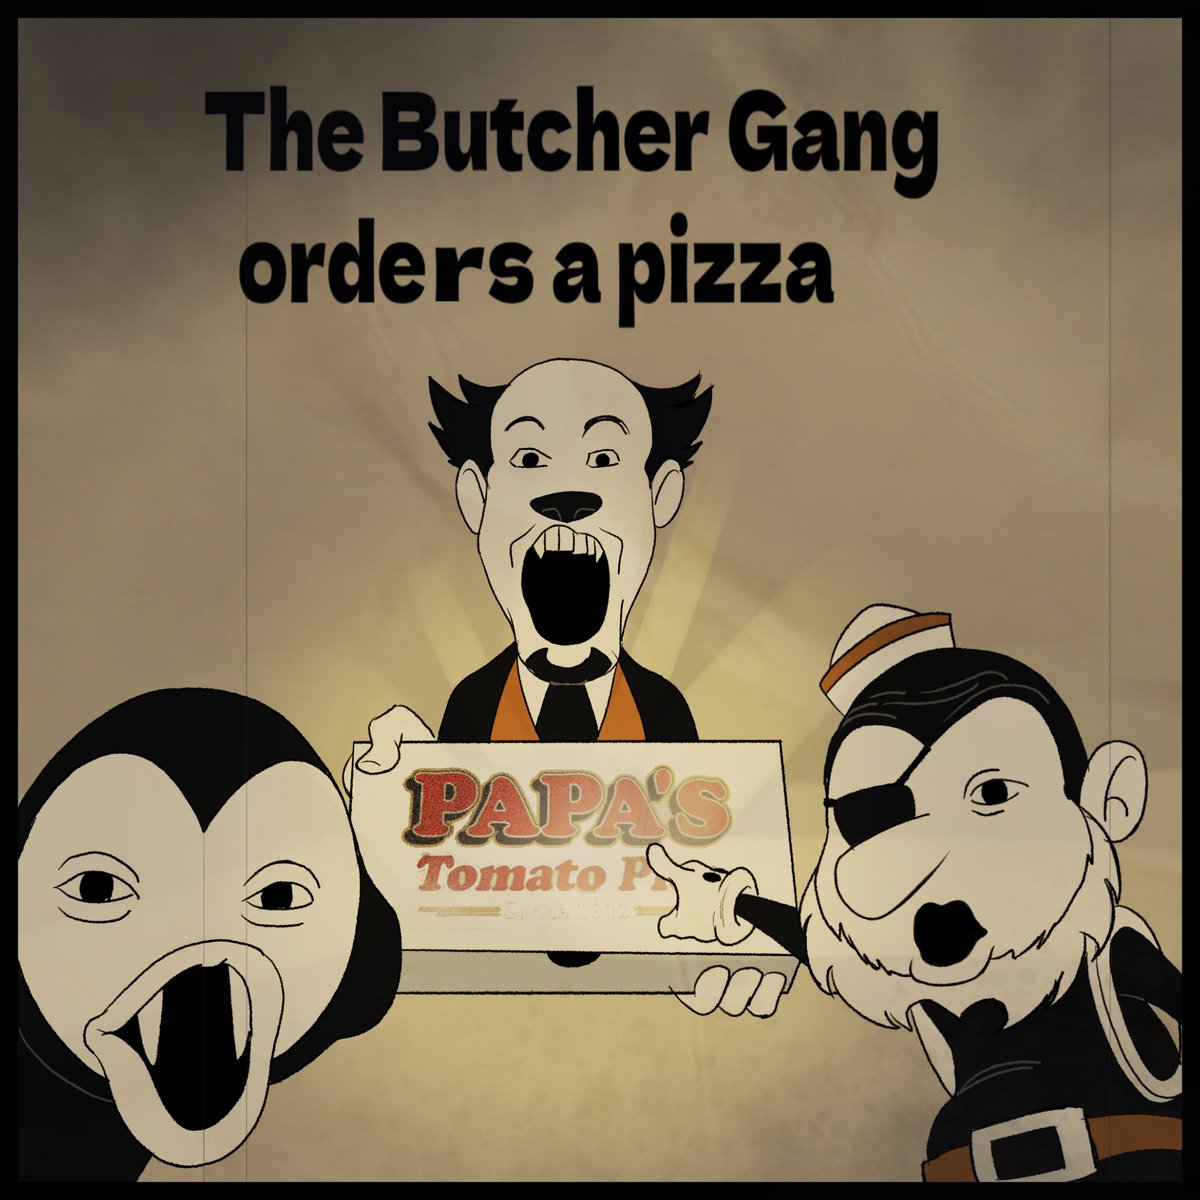 ' The Butcher Gang orders a pizza 🍕 '
#JoeysArtChallenge
#bendy #batdr